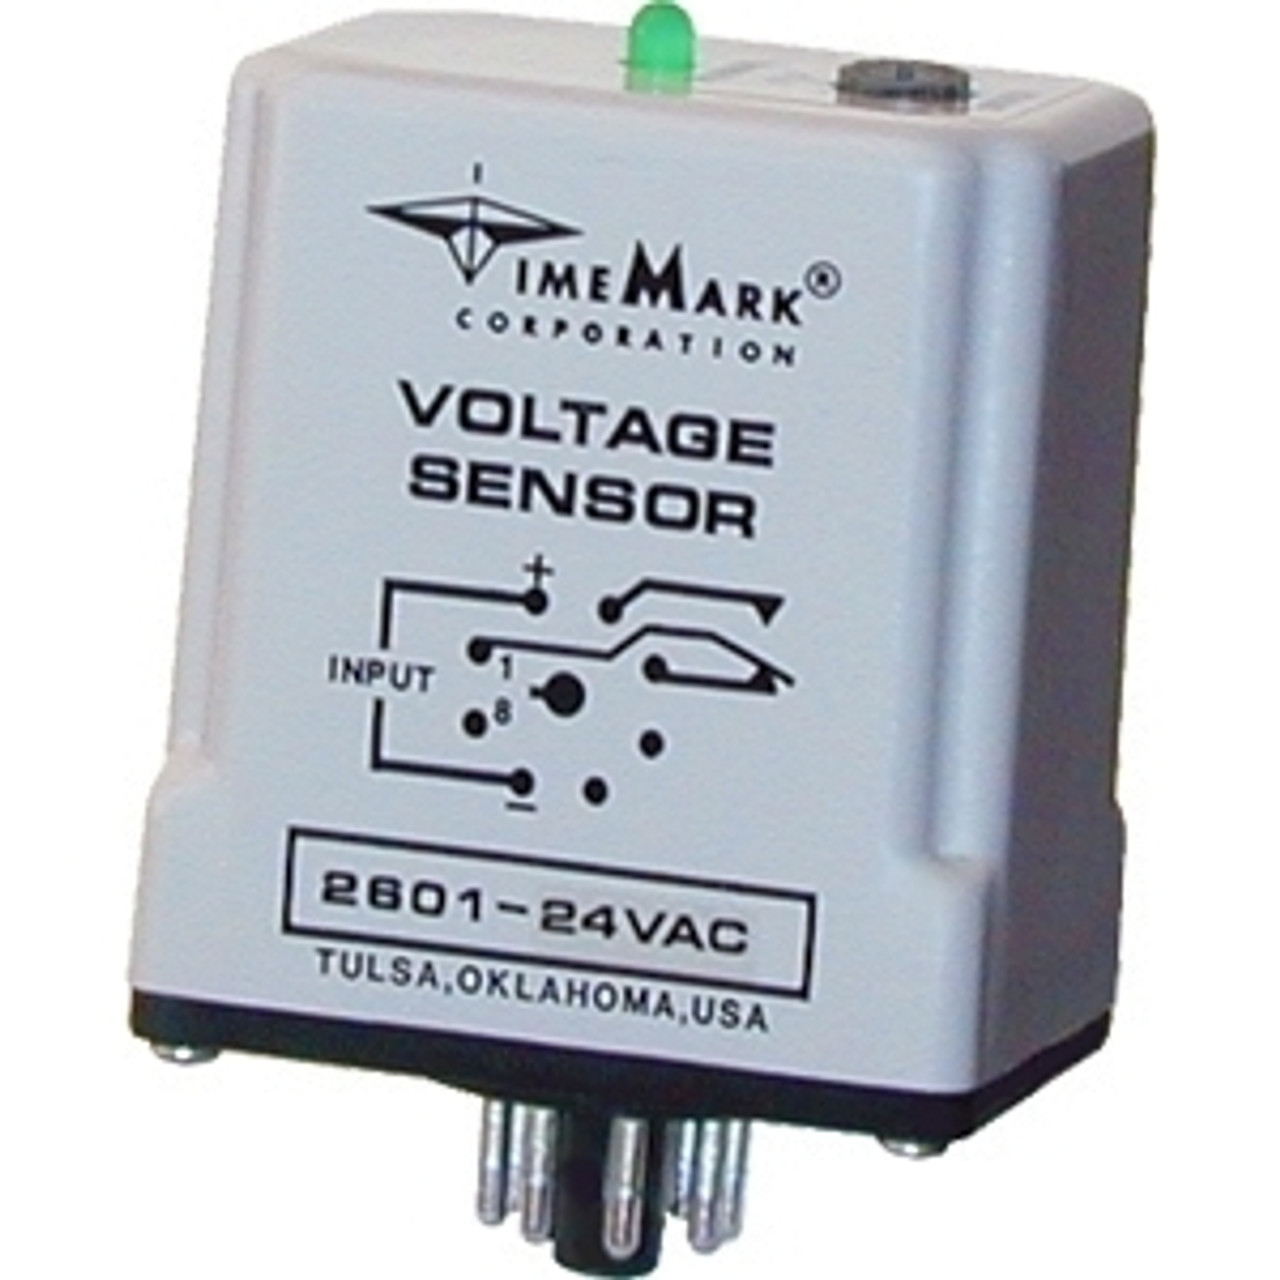 TimeMark 2601-240VAC Voltage Monitor Relays